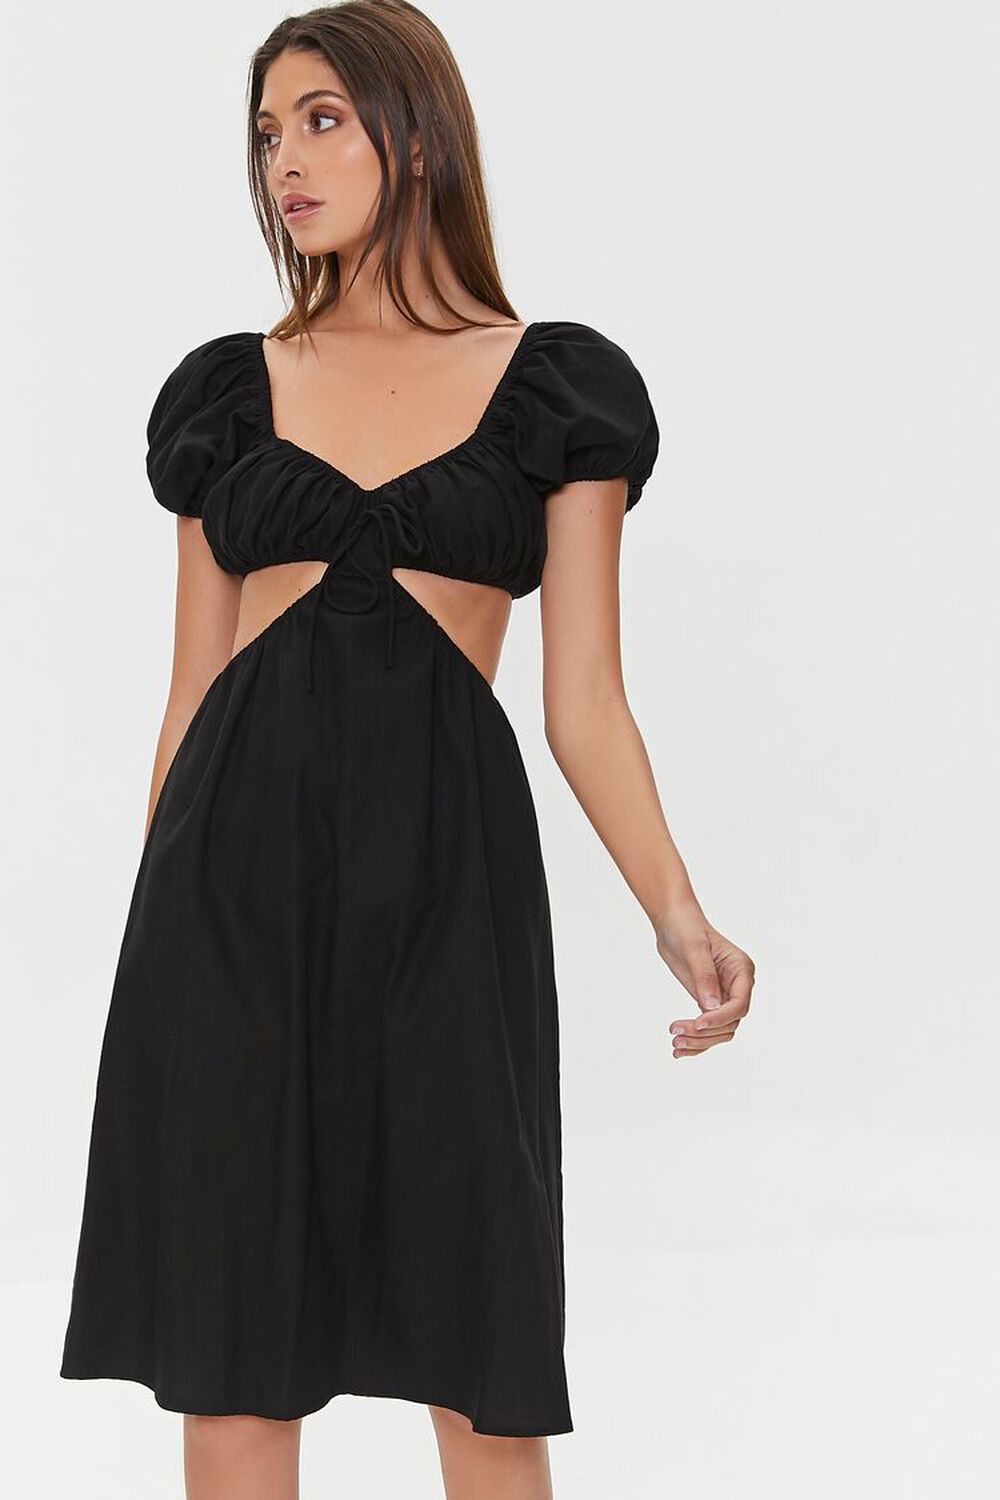 BLACK Sweetheart Cutout Midi Dress, image 1